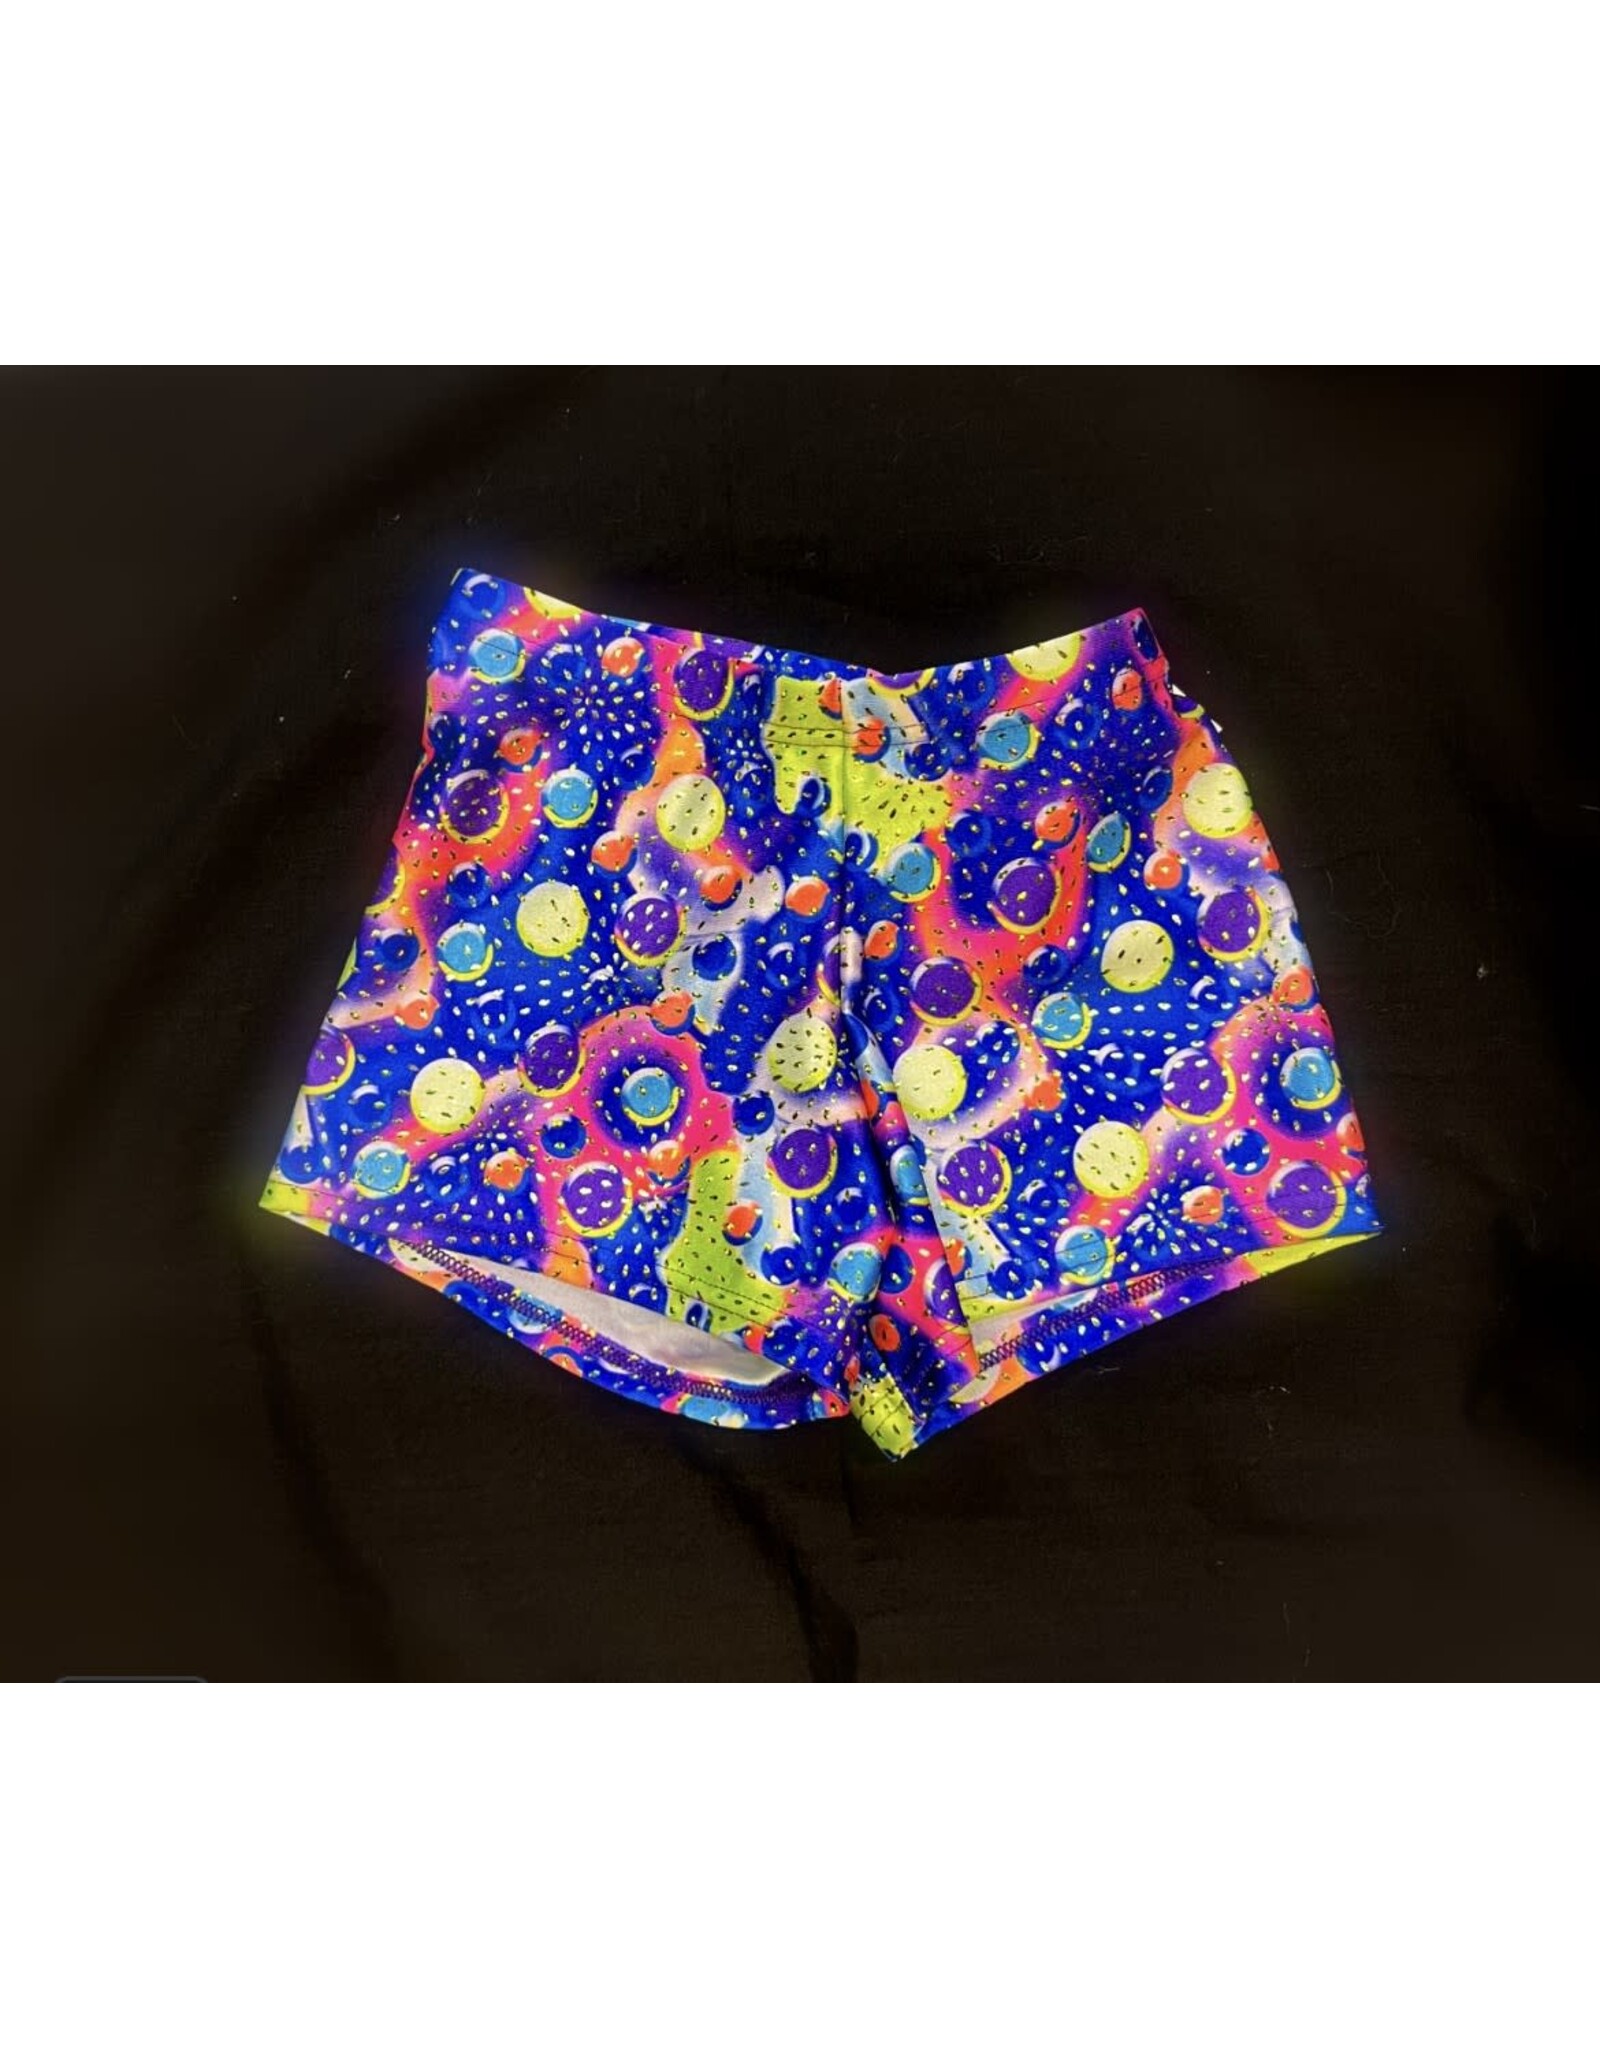 Mondor Printed Sparkling Shorts